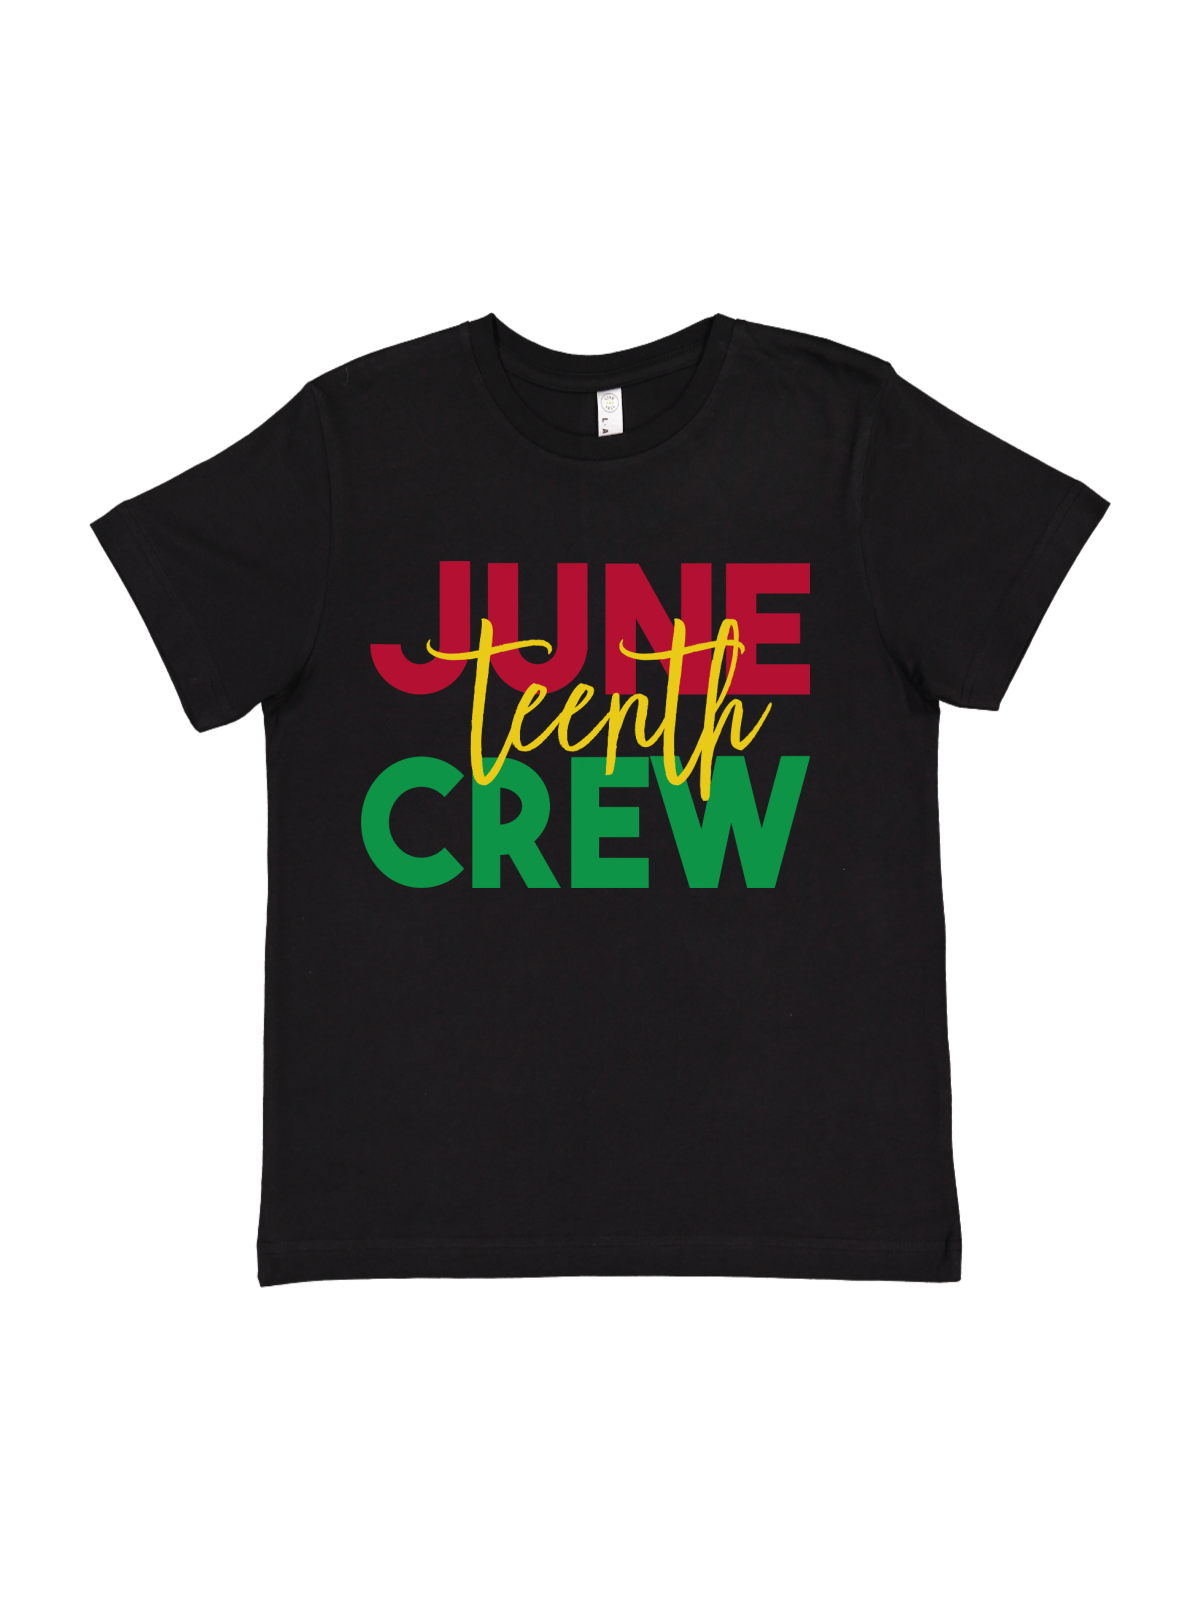 Juneteenth Crew Kids Shirt in Black